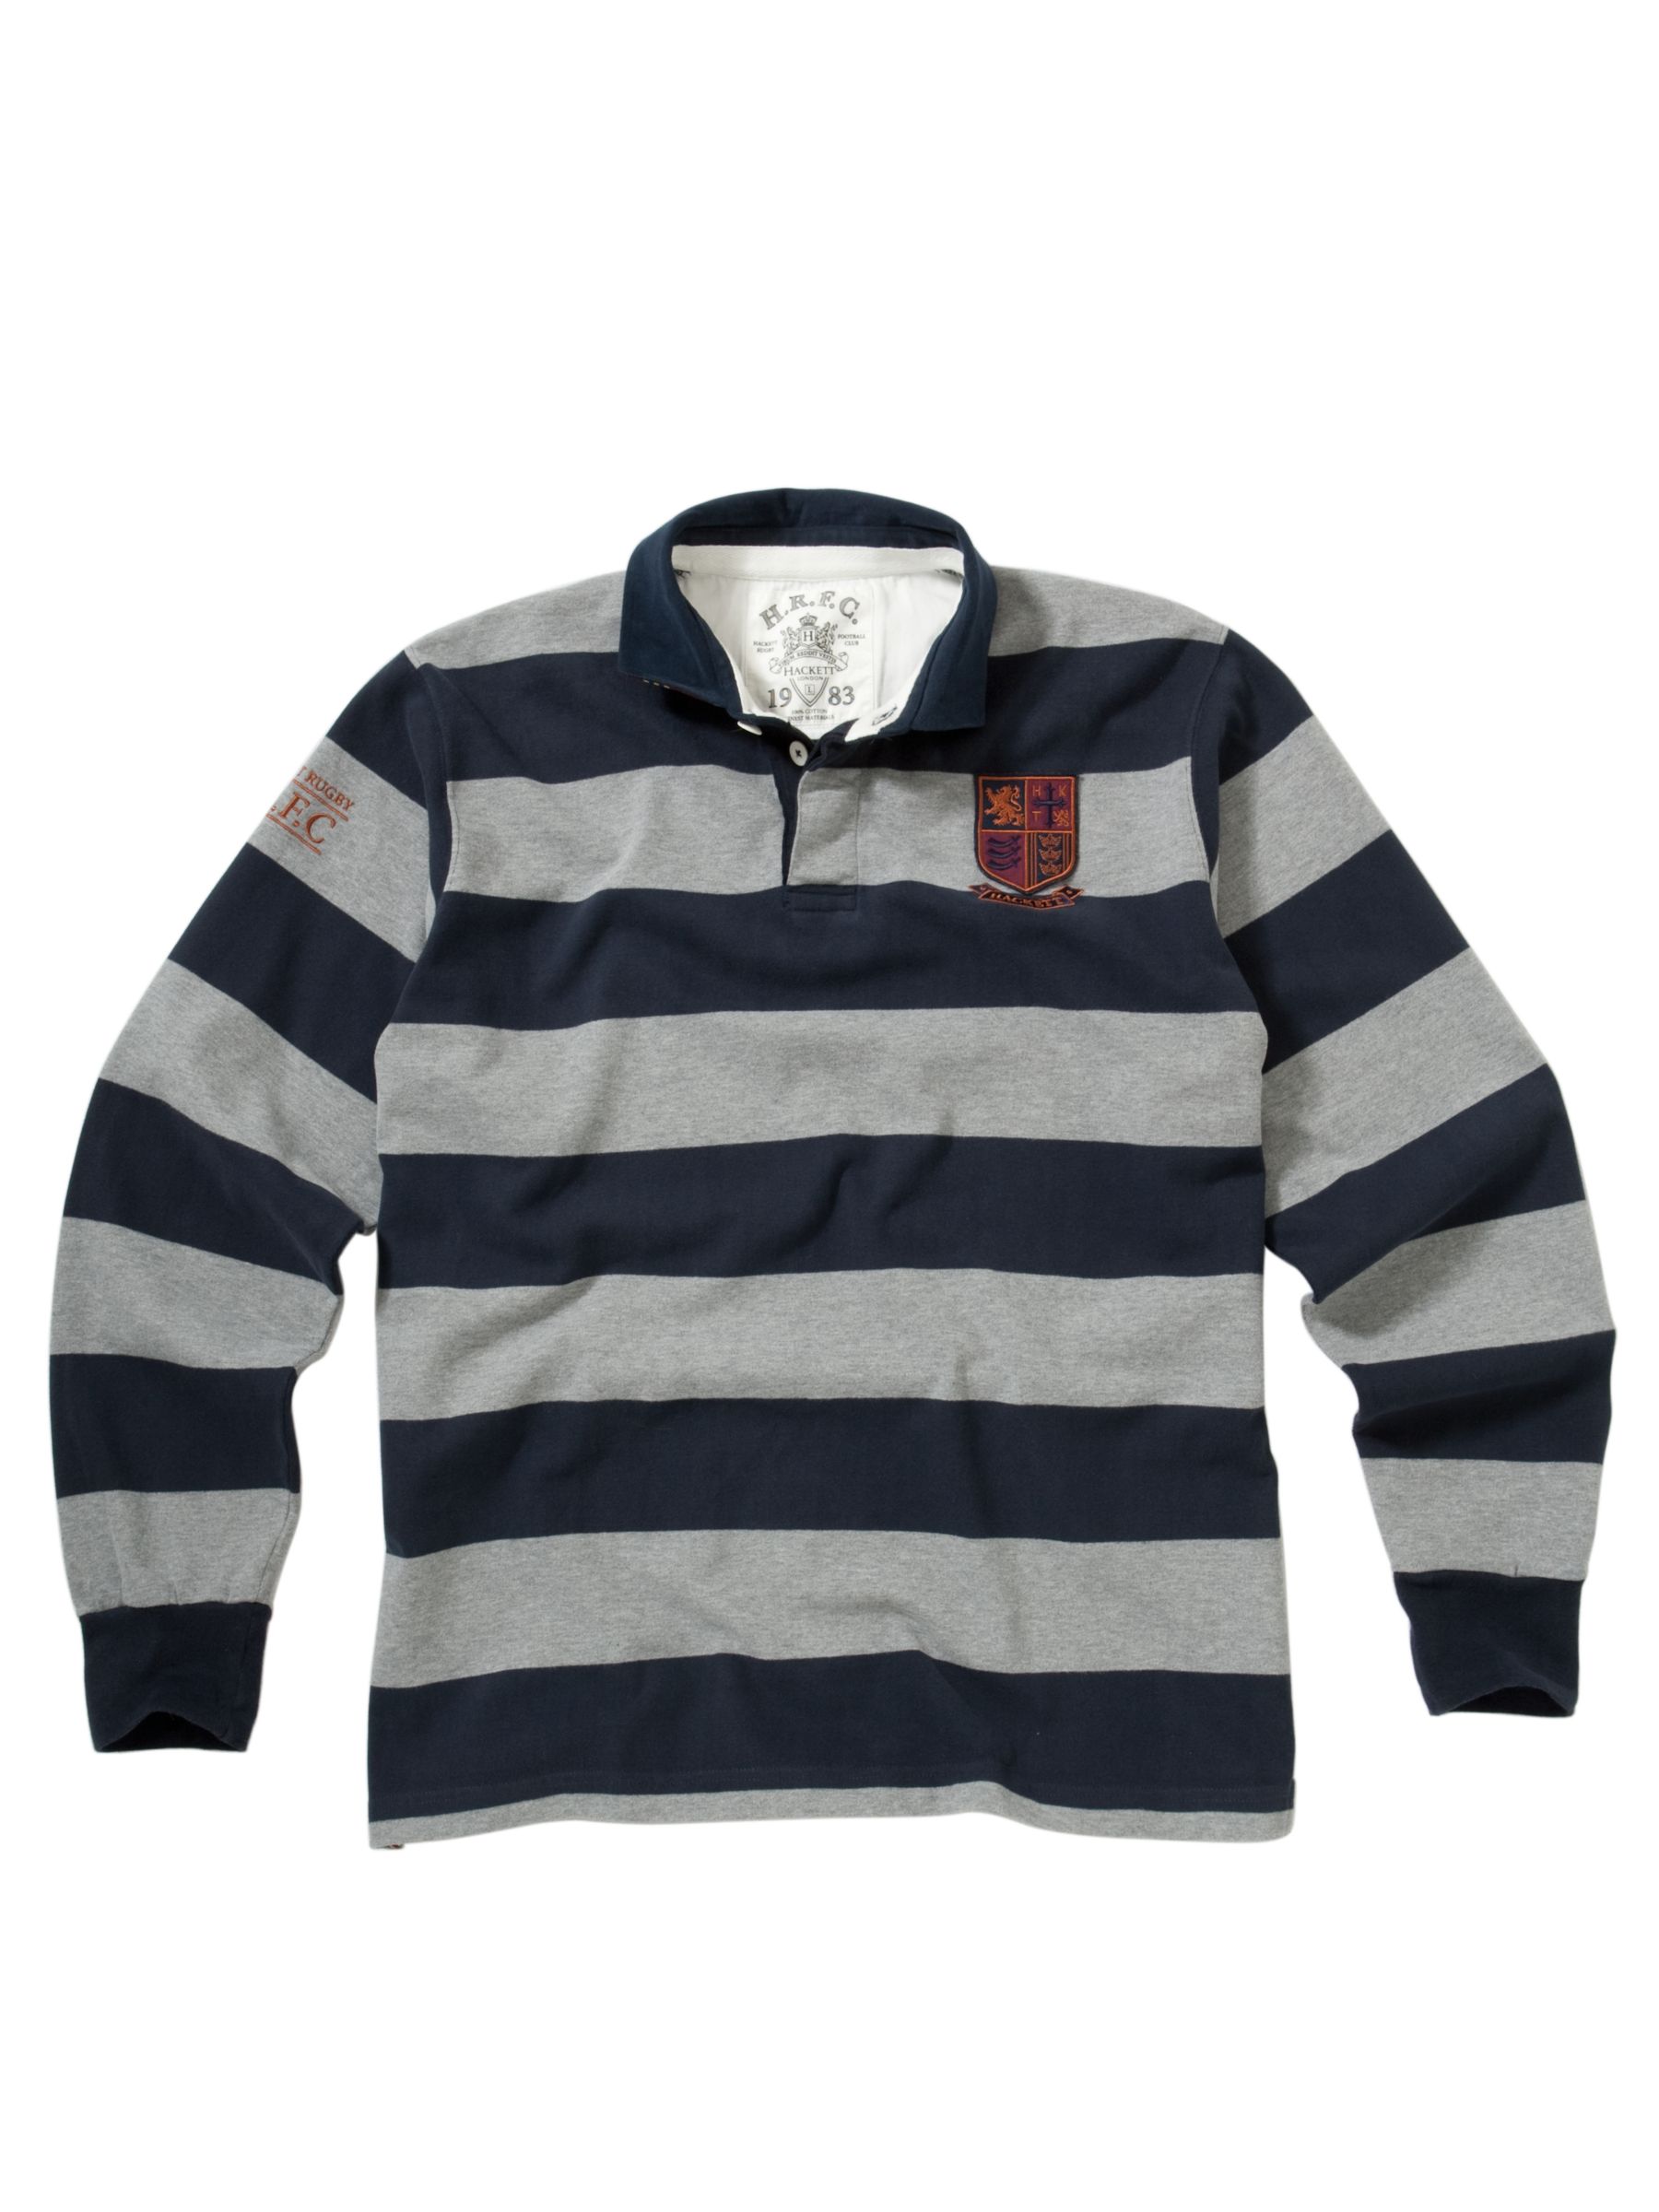 London Block Stripe Rugby Shirt, Navy/Grey